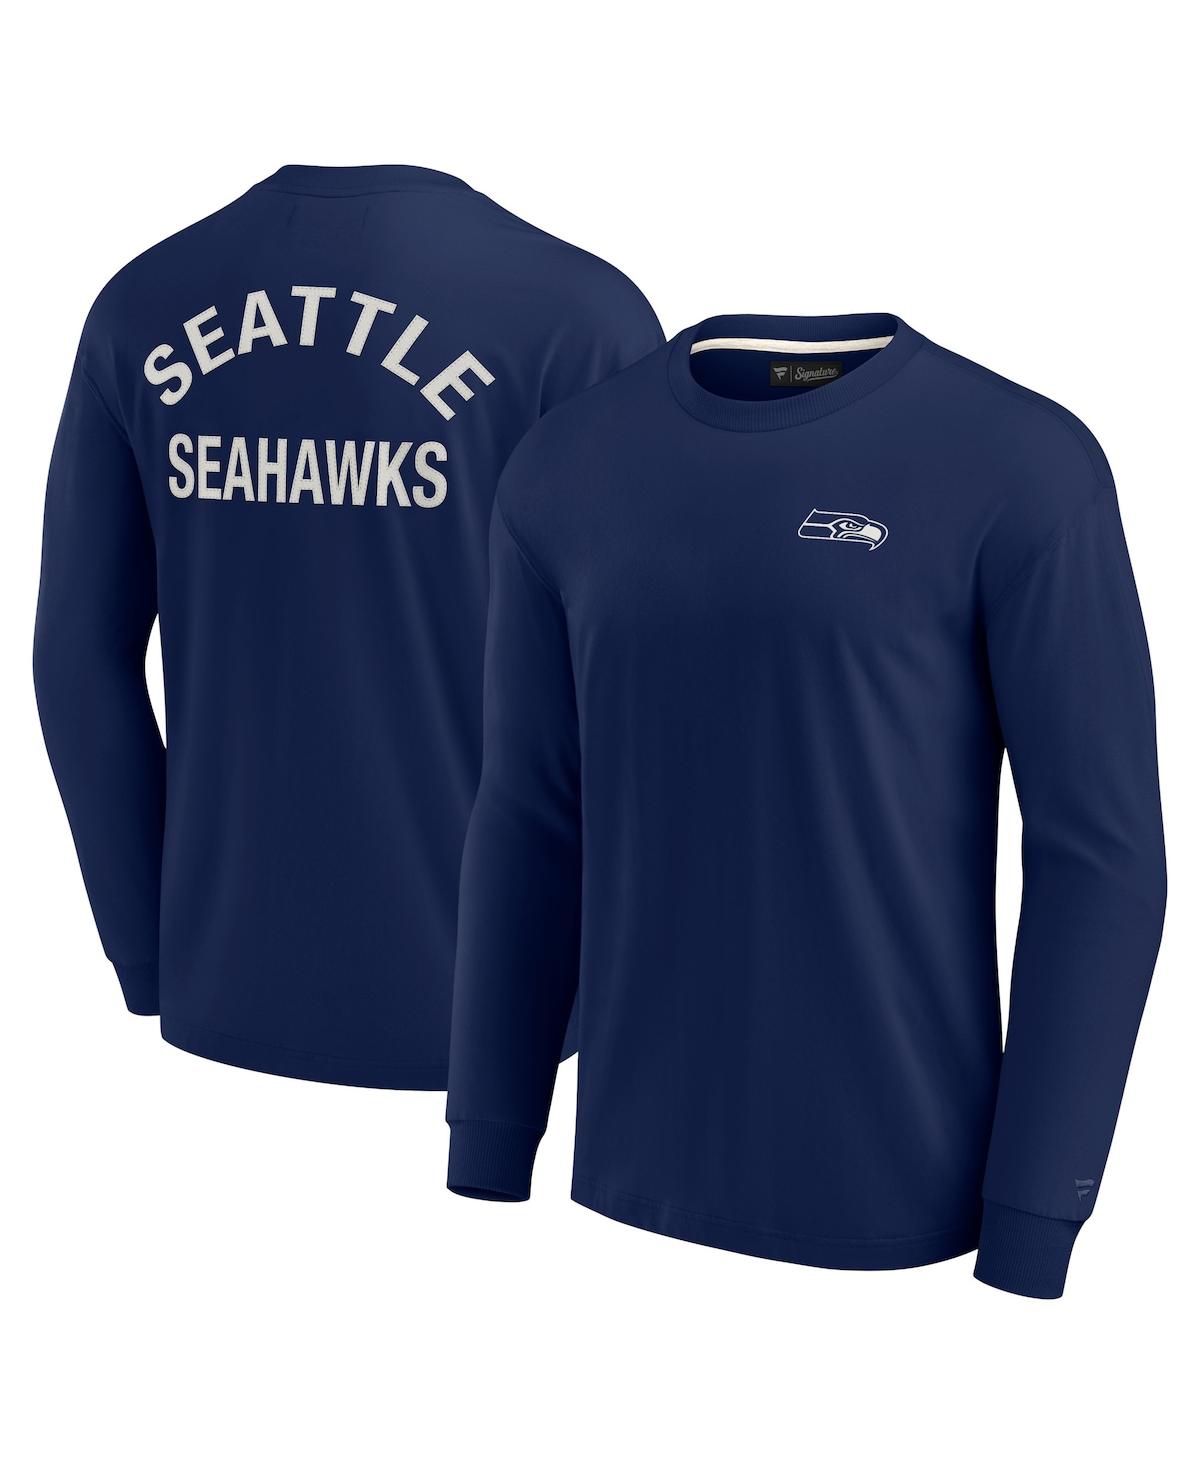 Fanatics Signature Men's And Women's  College Navy Seattle Seahawks Super Soft Long Sleeve T-shirt